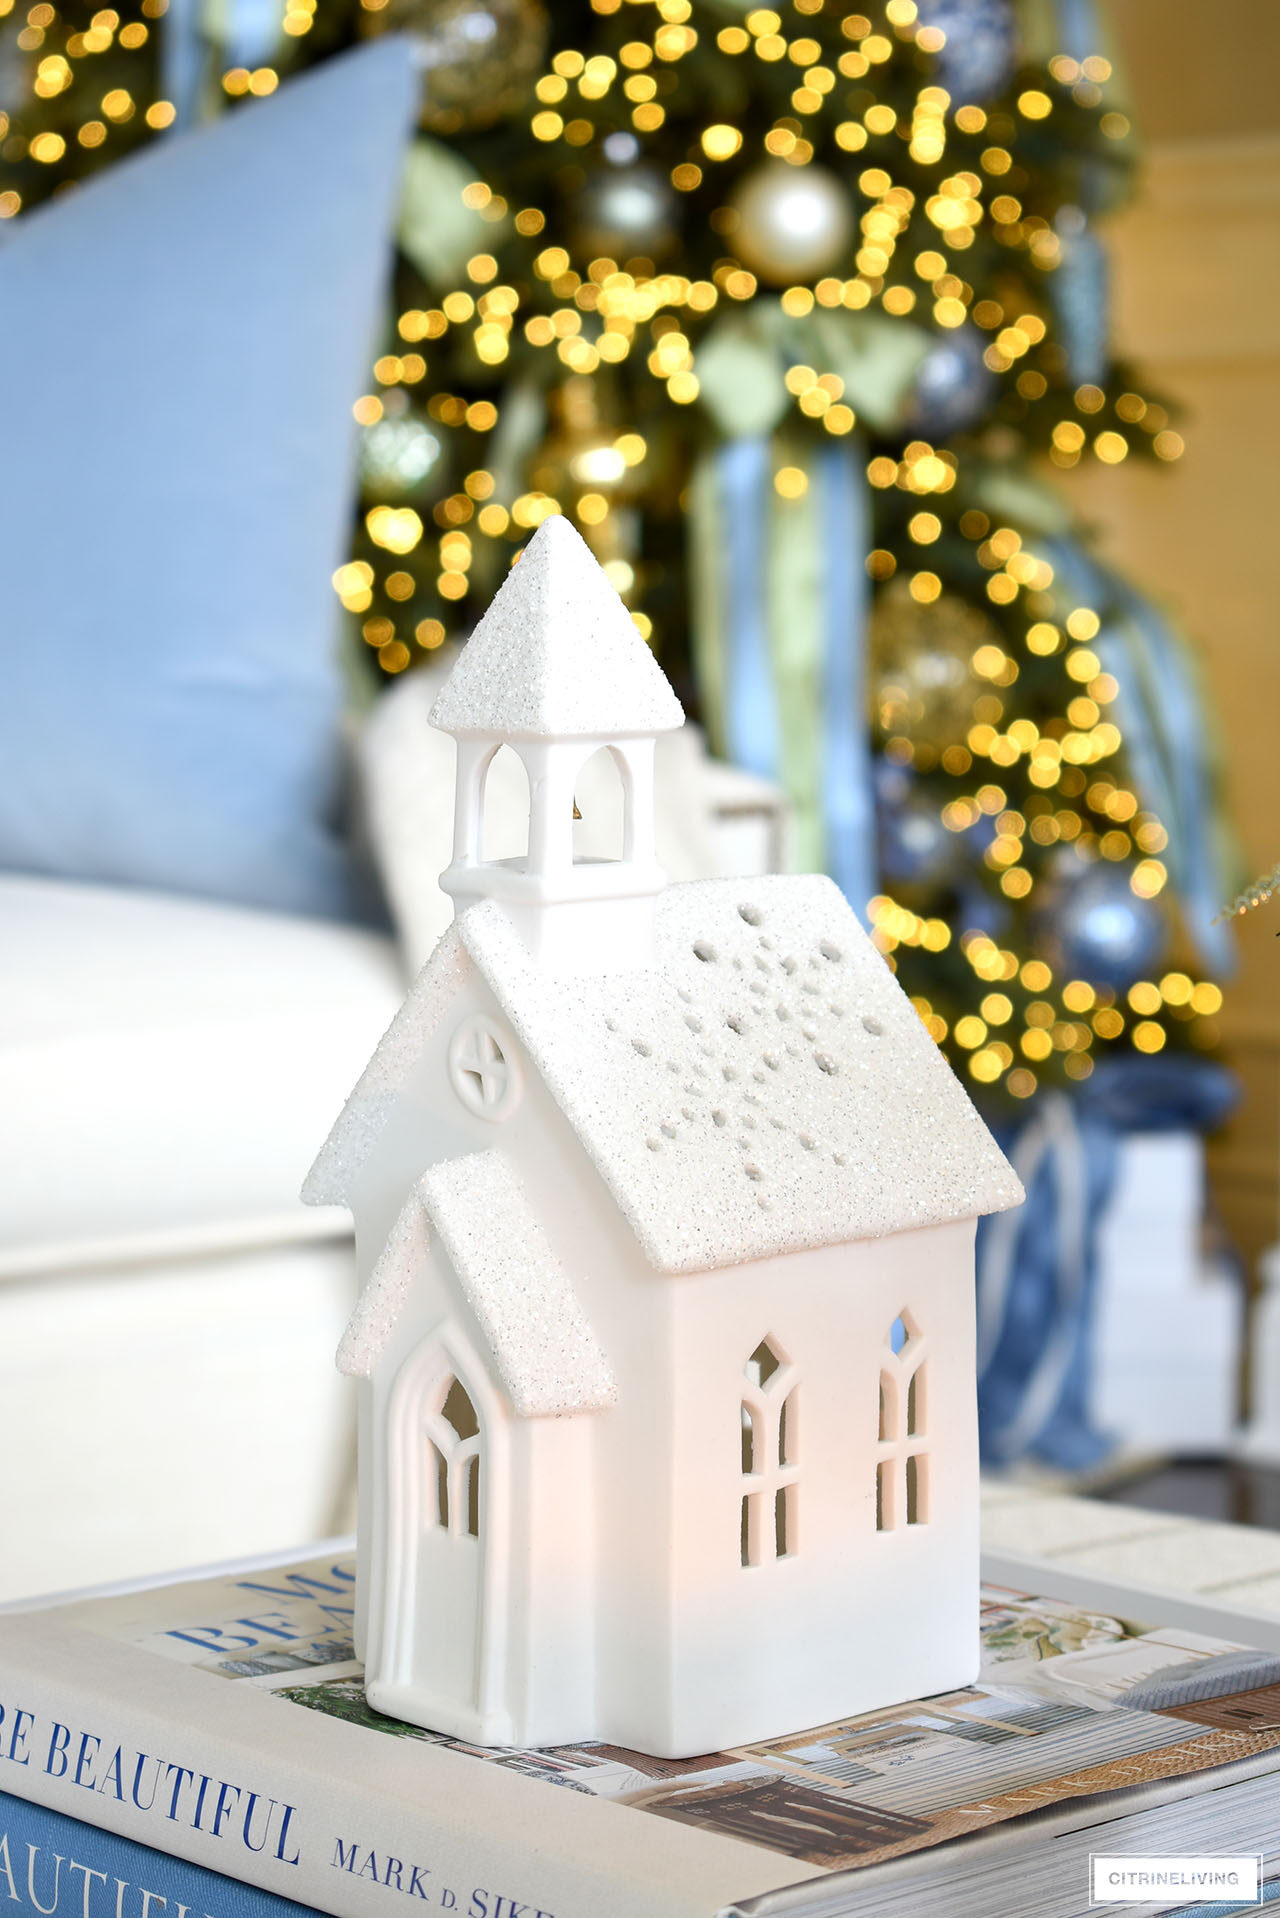 A beautiful white ceramic Christmas village church